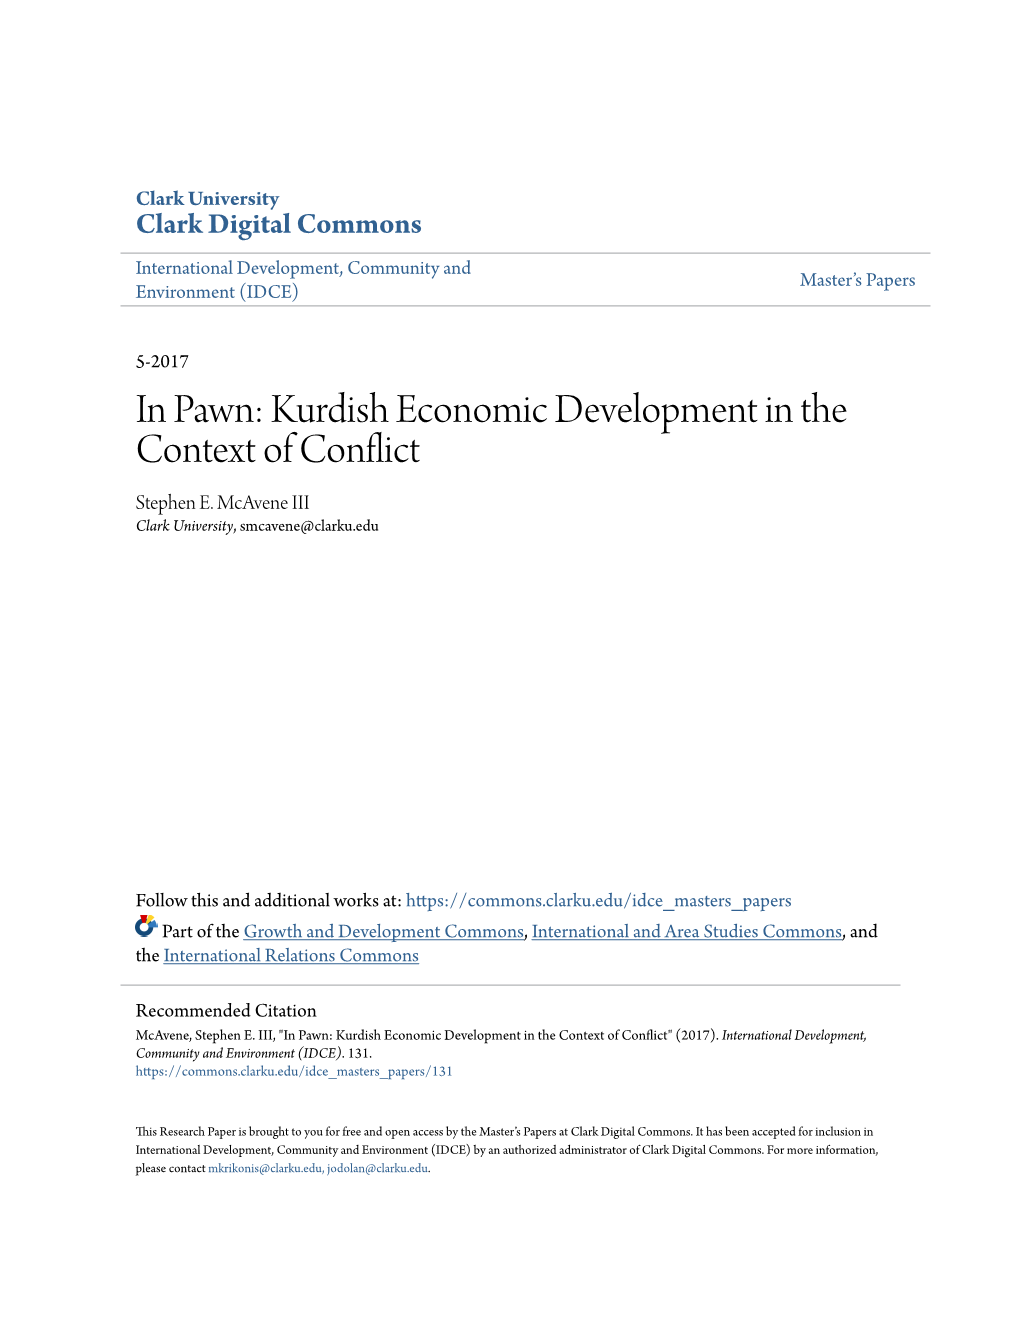 Kurdish Economic Development in the Context of Conflict Stephen E